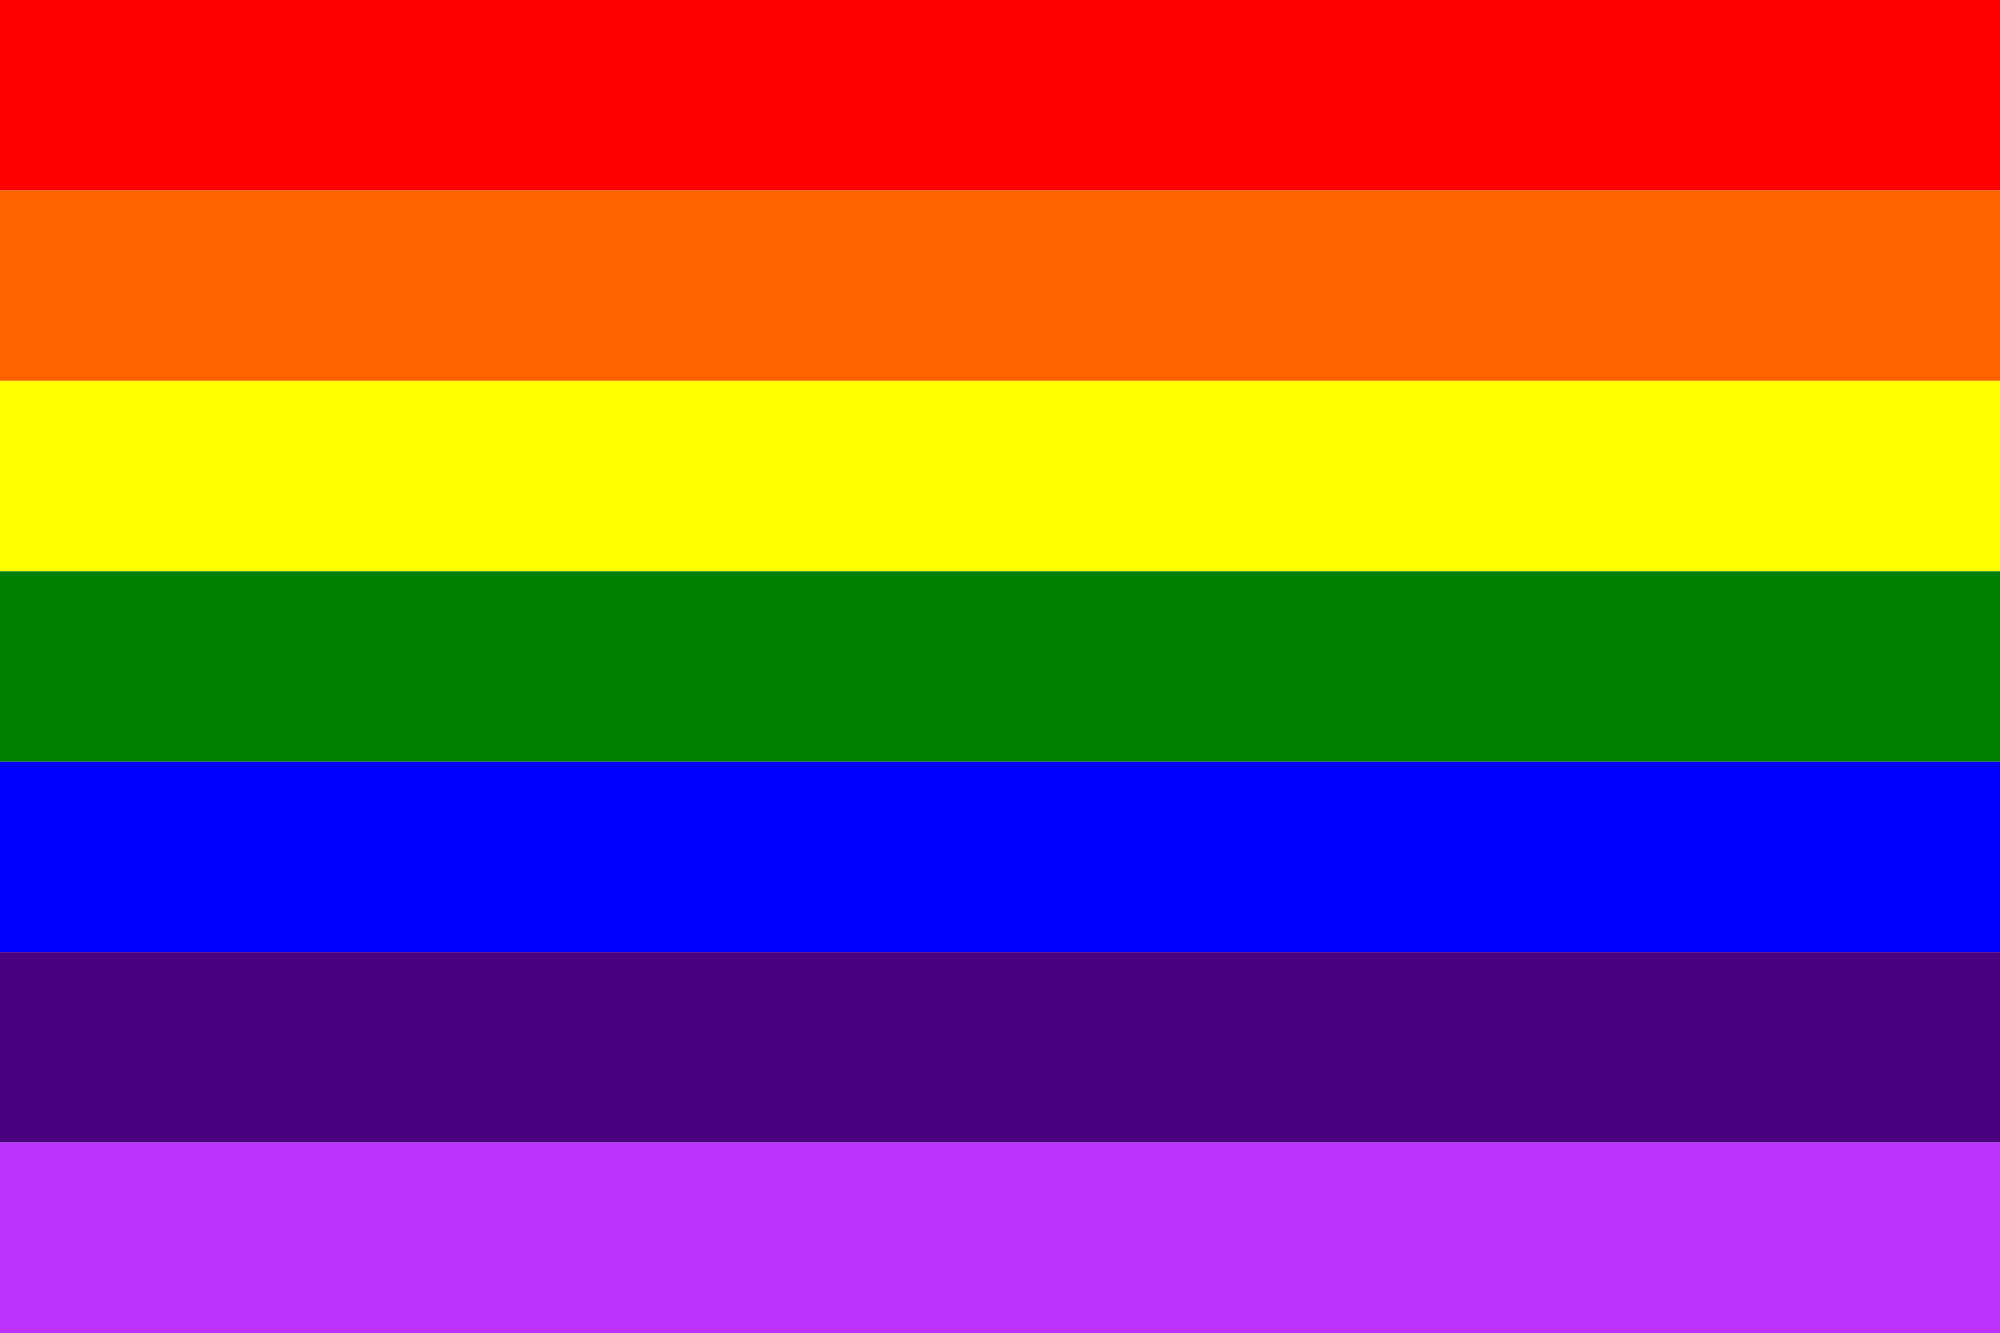 gay pride background screen logo